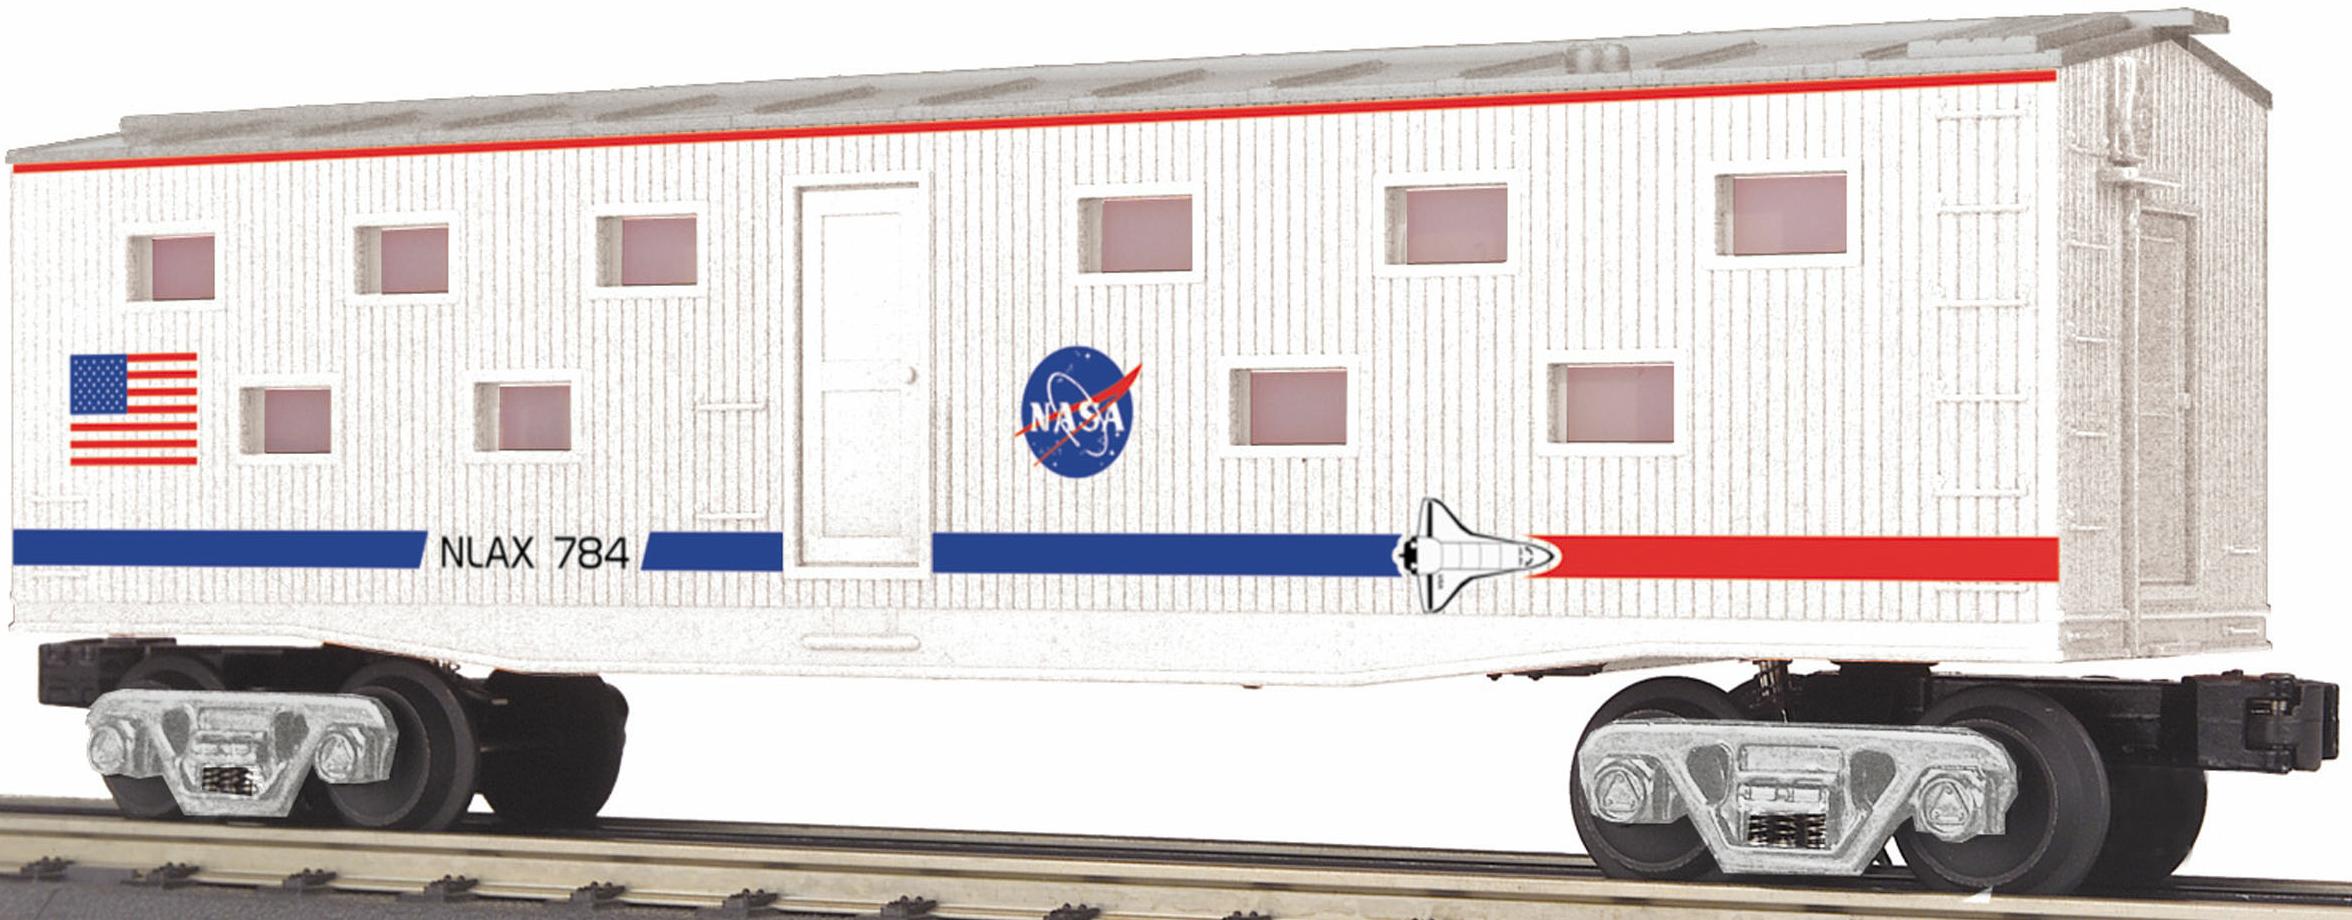 NASA Bunk Car image